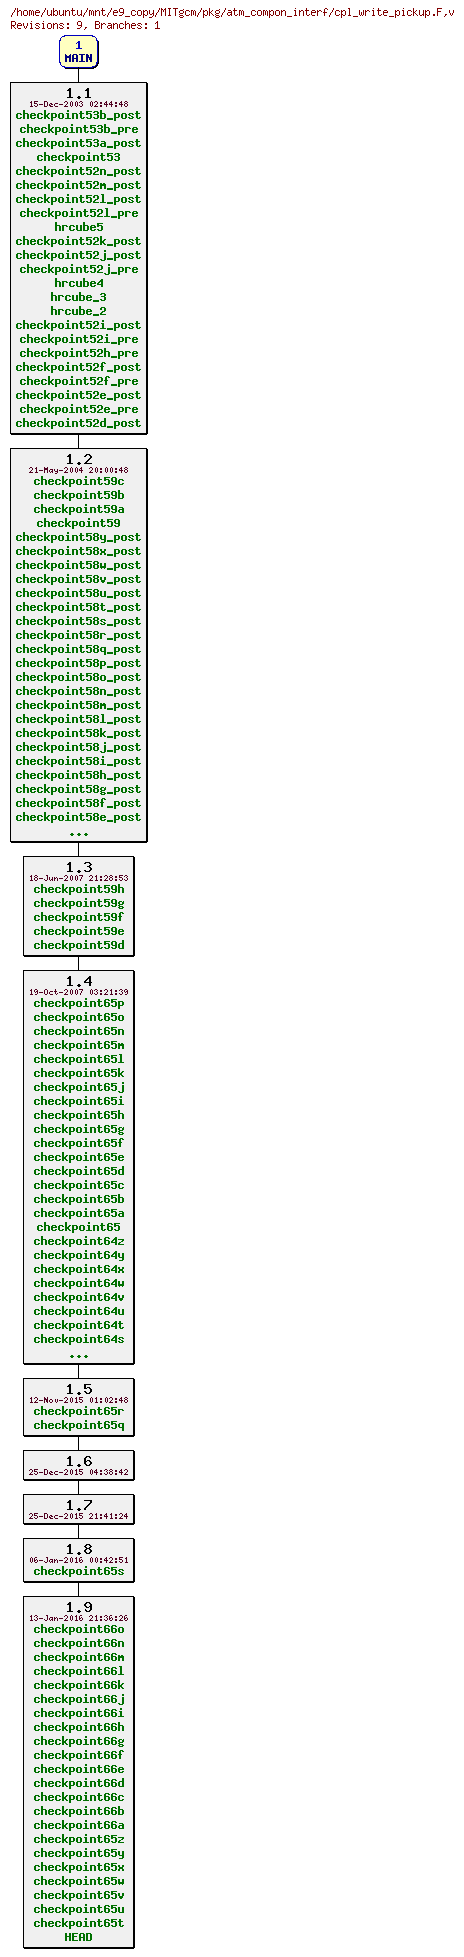 Revisions of MITgcm/pkg/atm_compon_interf/cpl_write_pickup.F